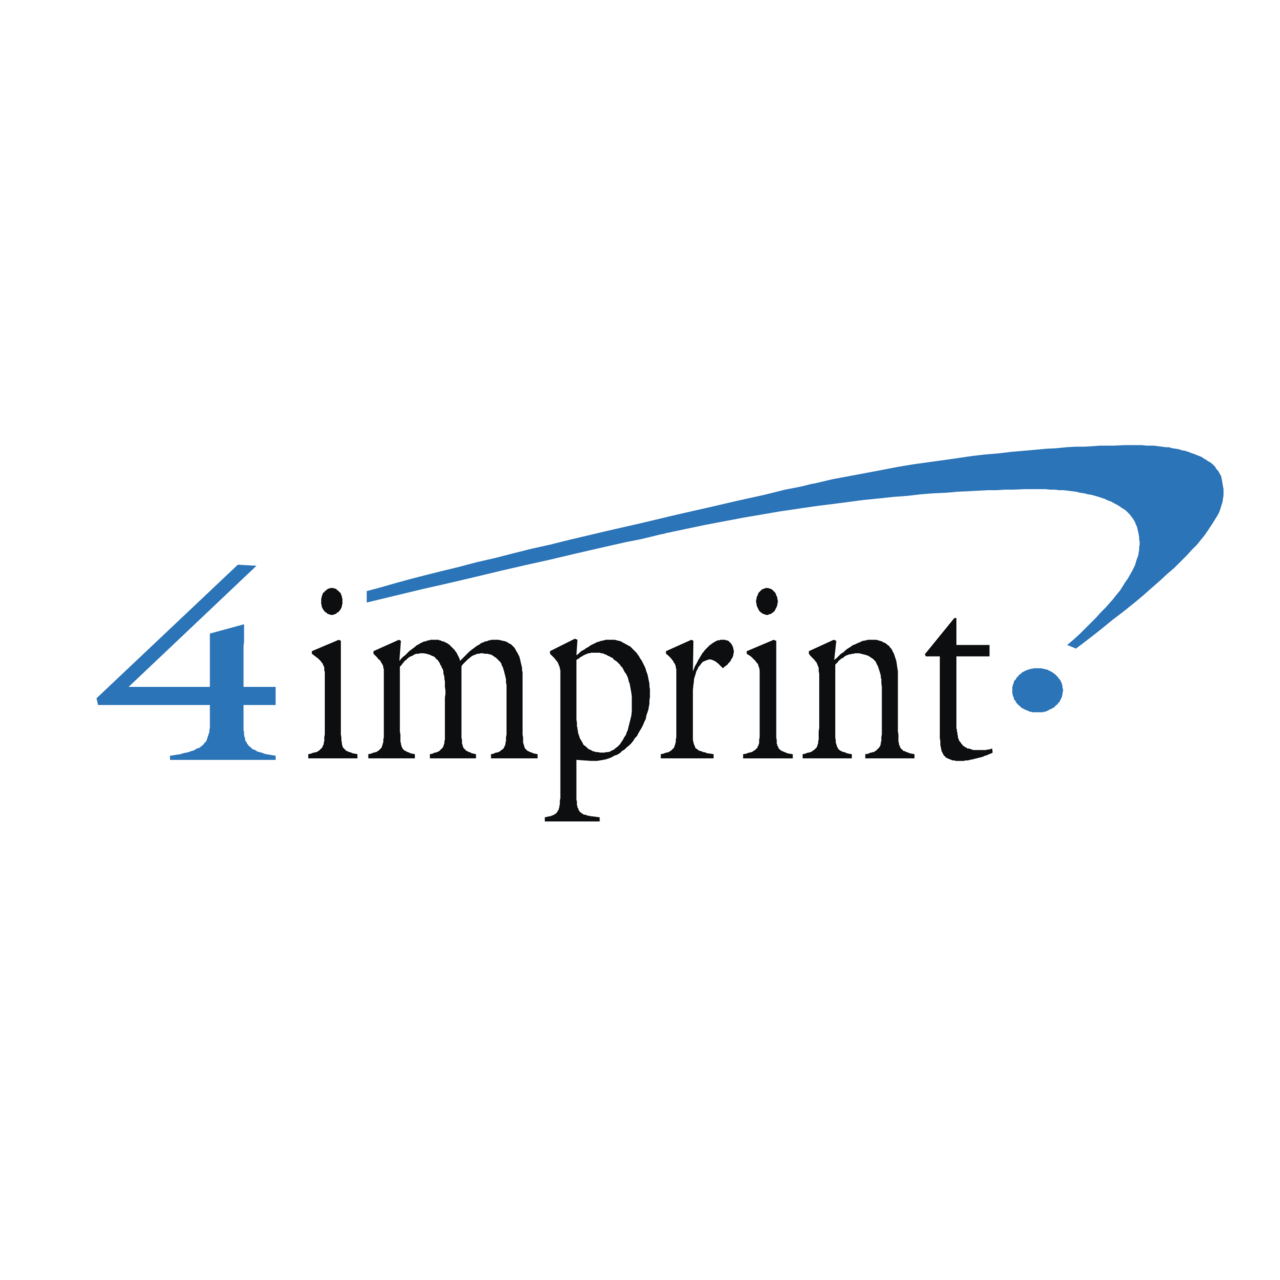 4imprint-logo.png